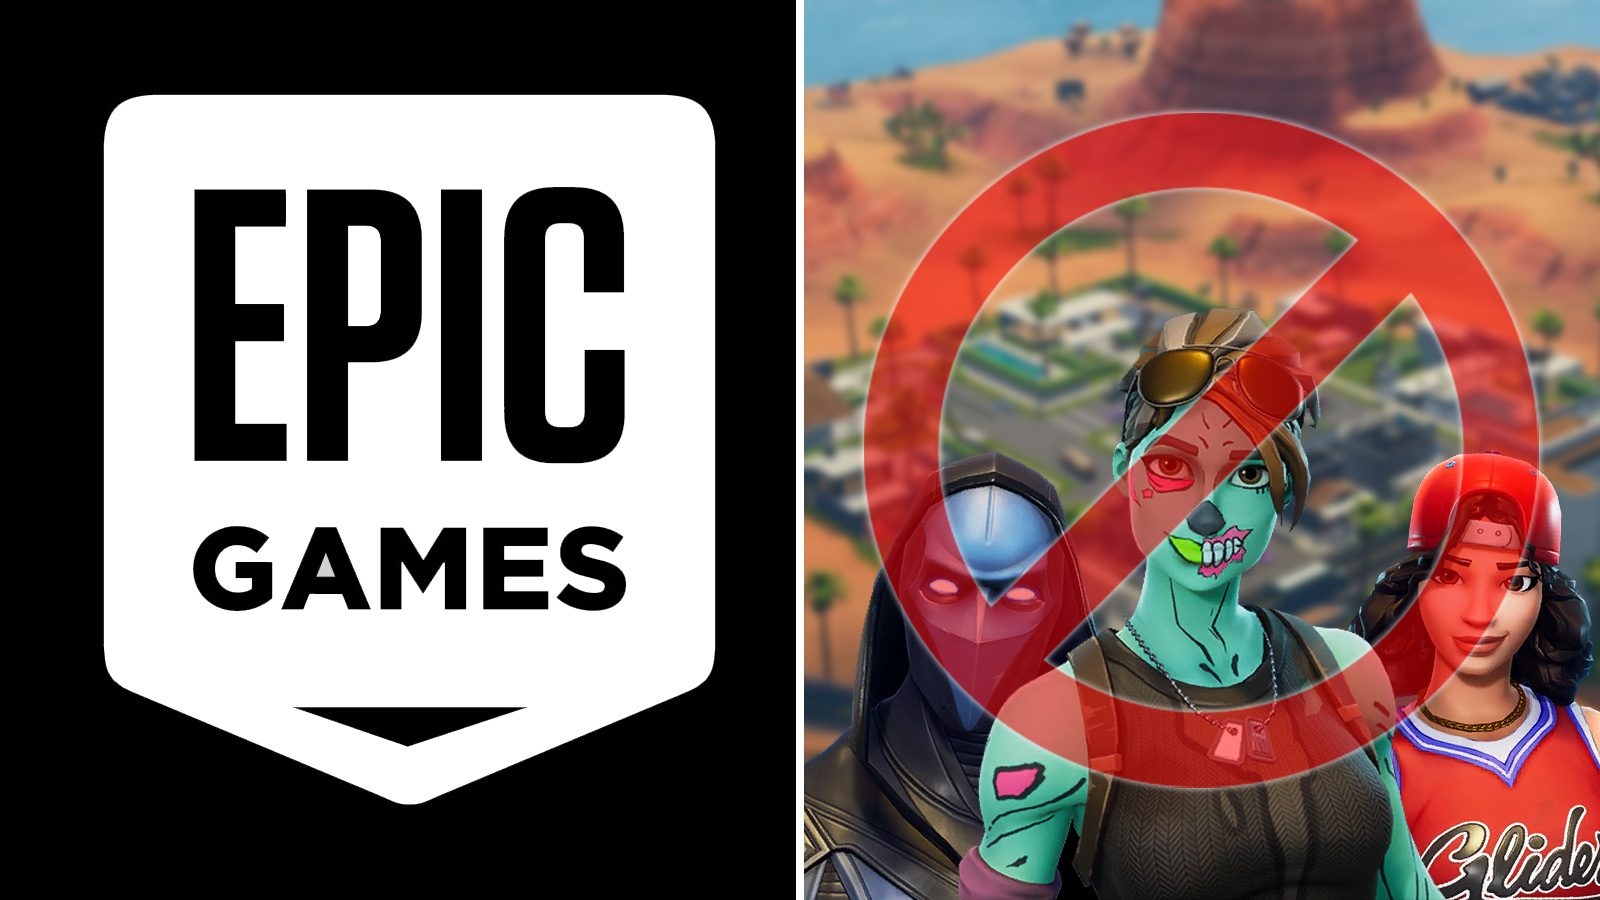 Fortnite almost got canceled, says ex-Epic Games dev - Polygon